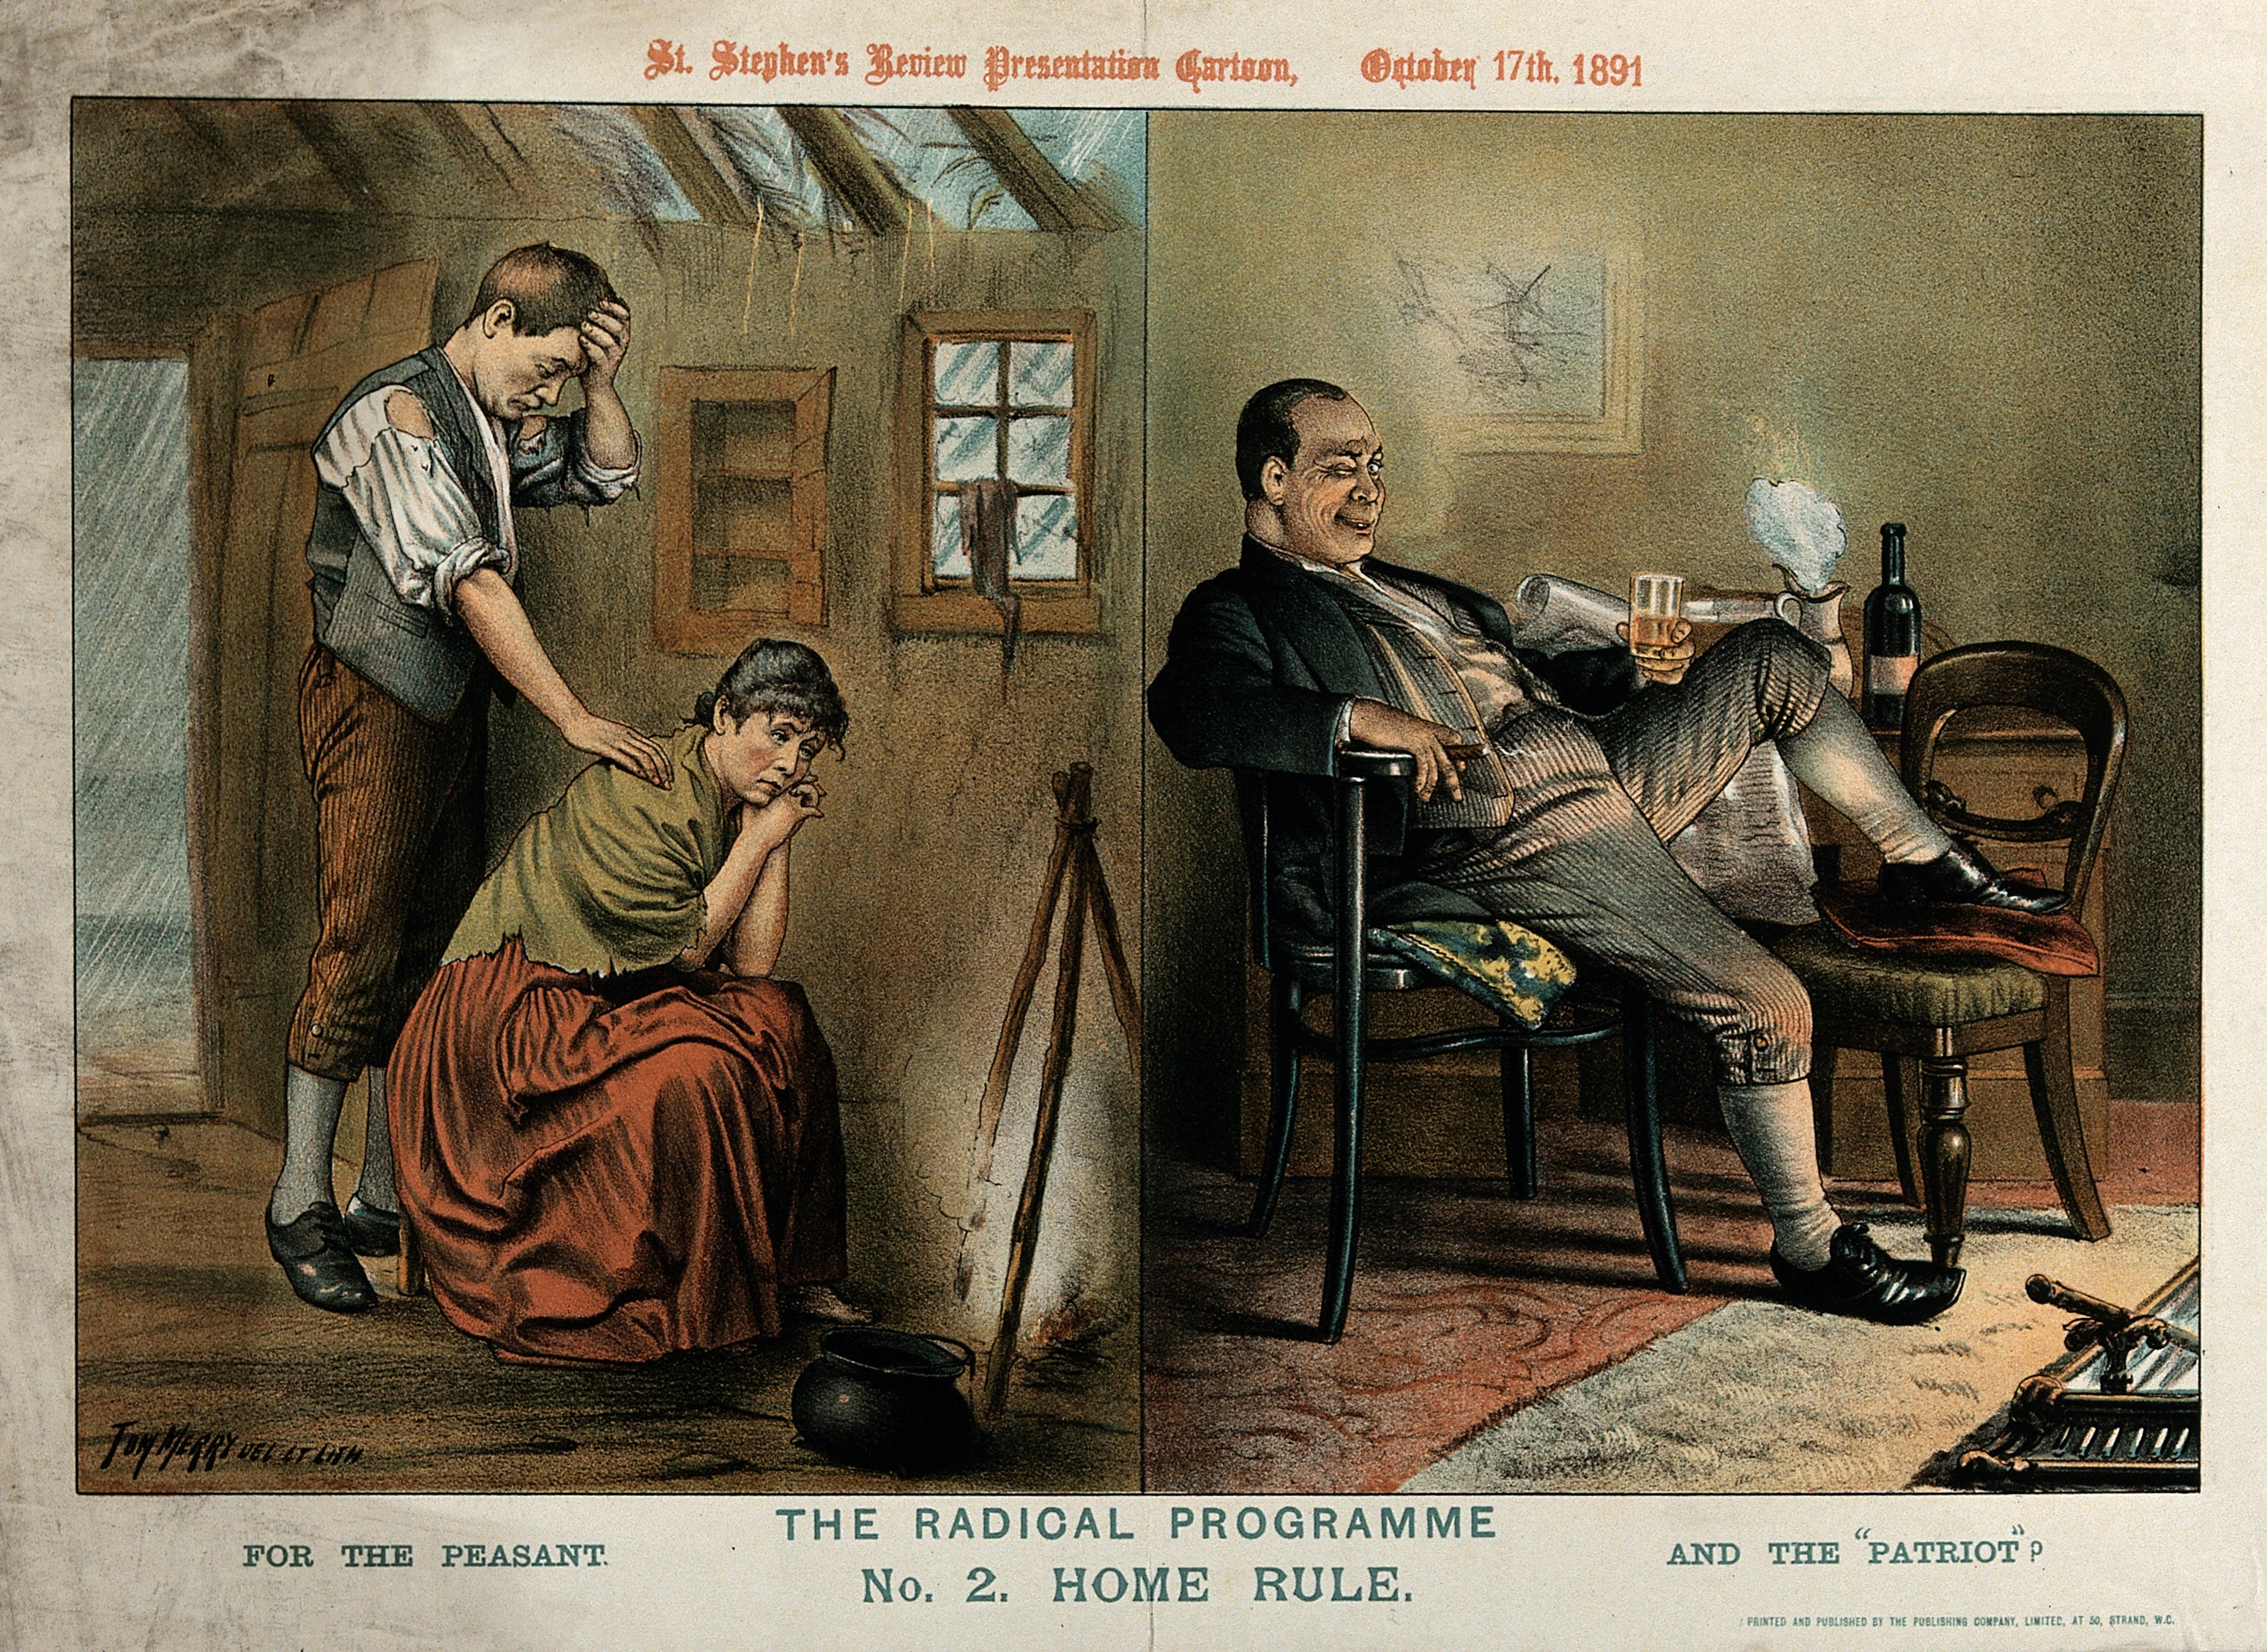 An anti-Home Rule cartoon from 1891.